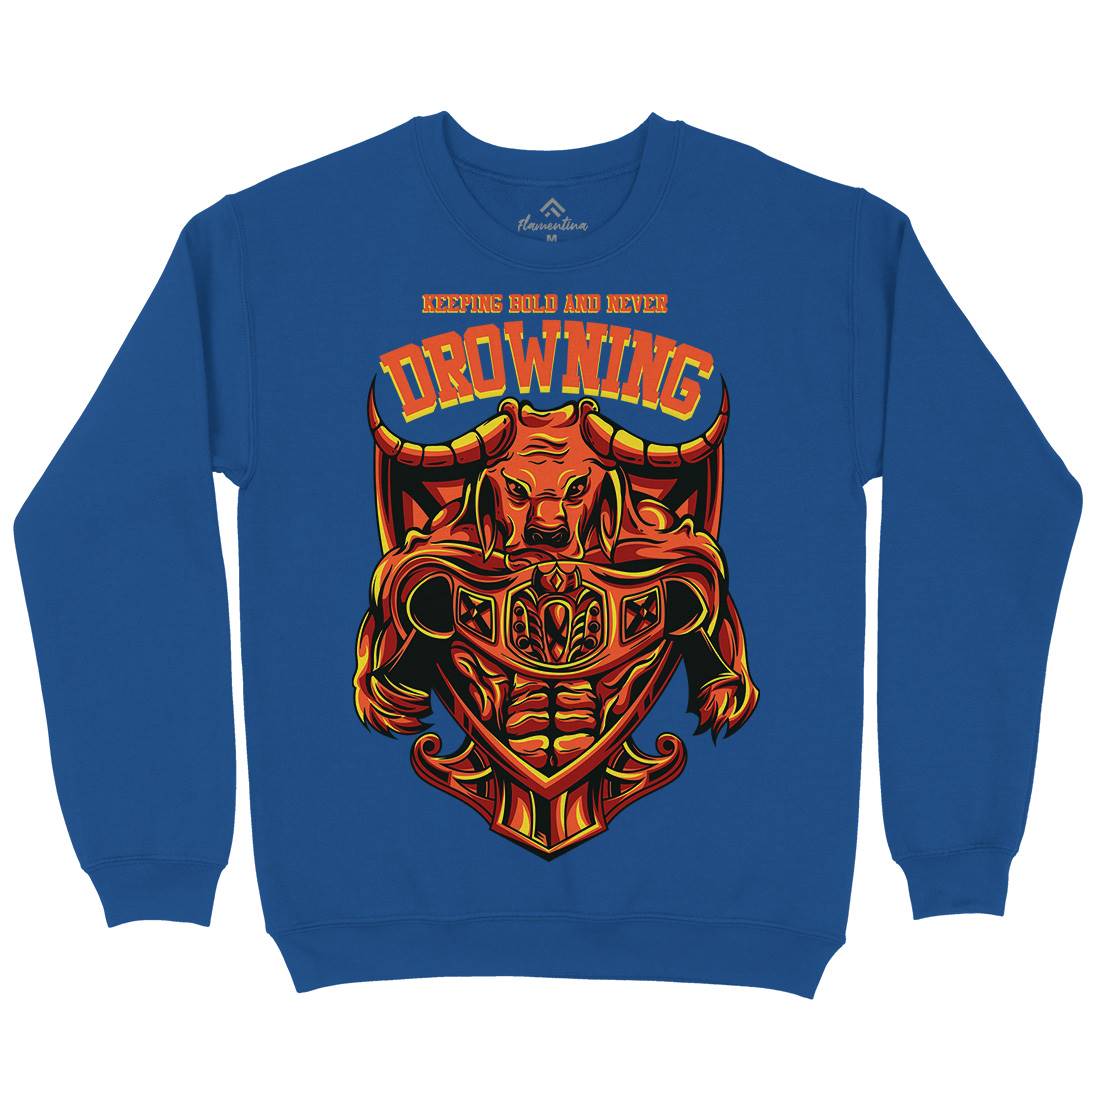 Drowning Bull Kids Crew Neck Sweatshirt Warriors D763